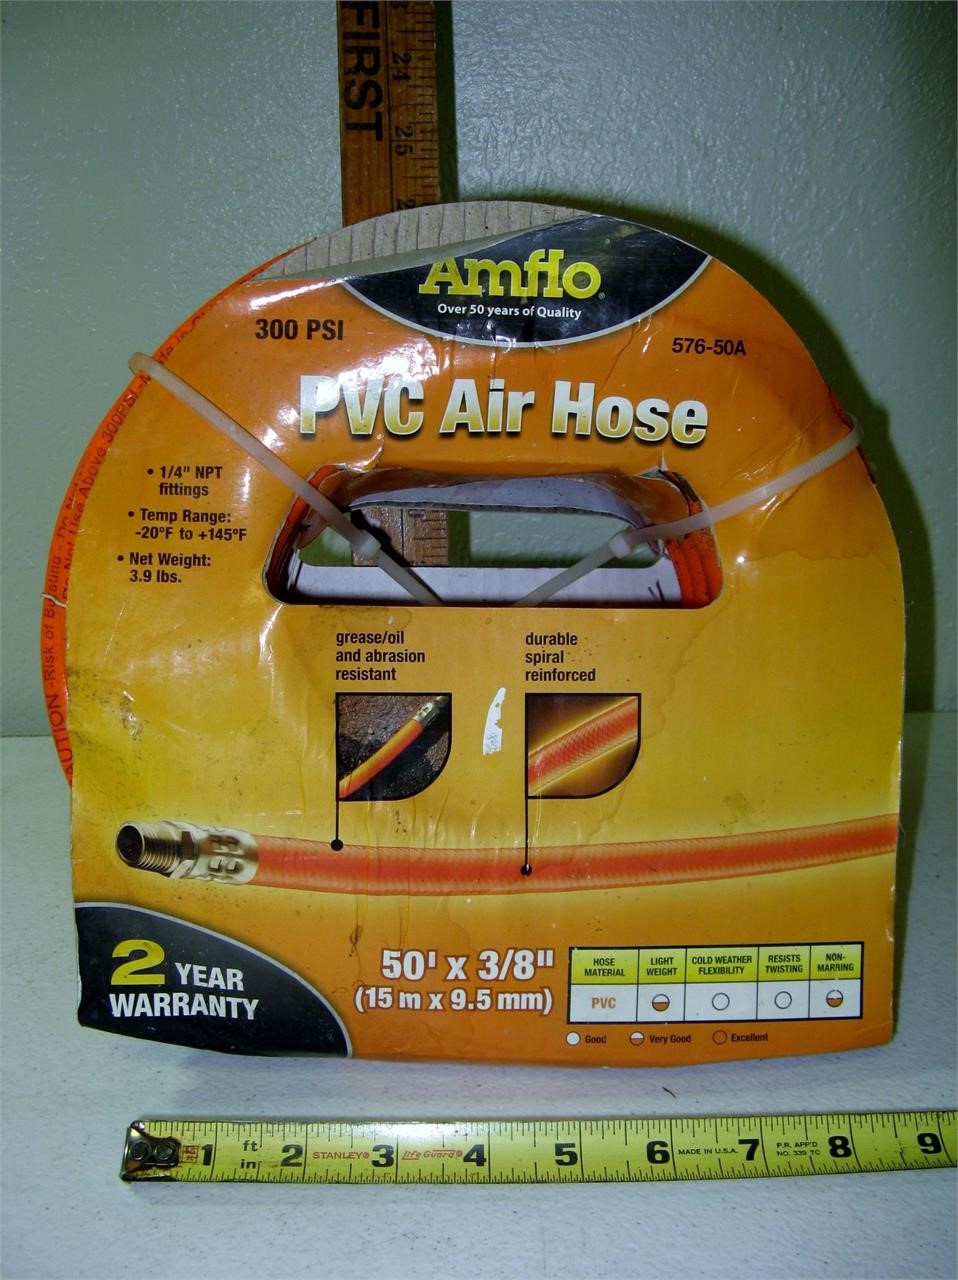 New Amflo 300psi PVC Air Hose